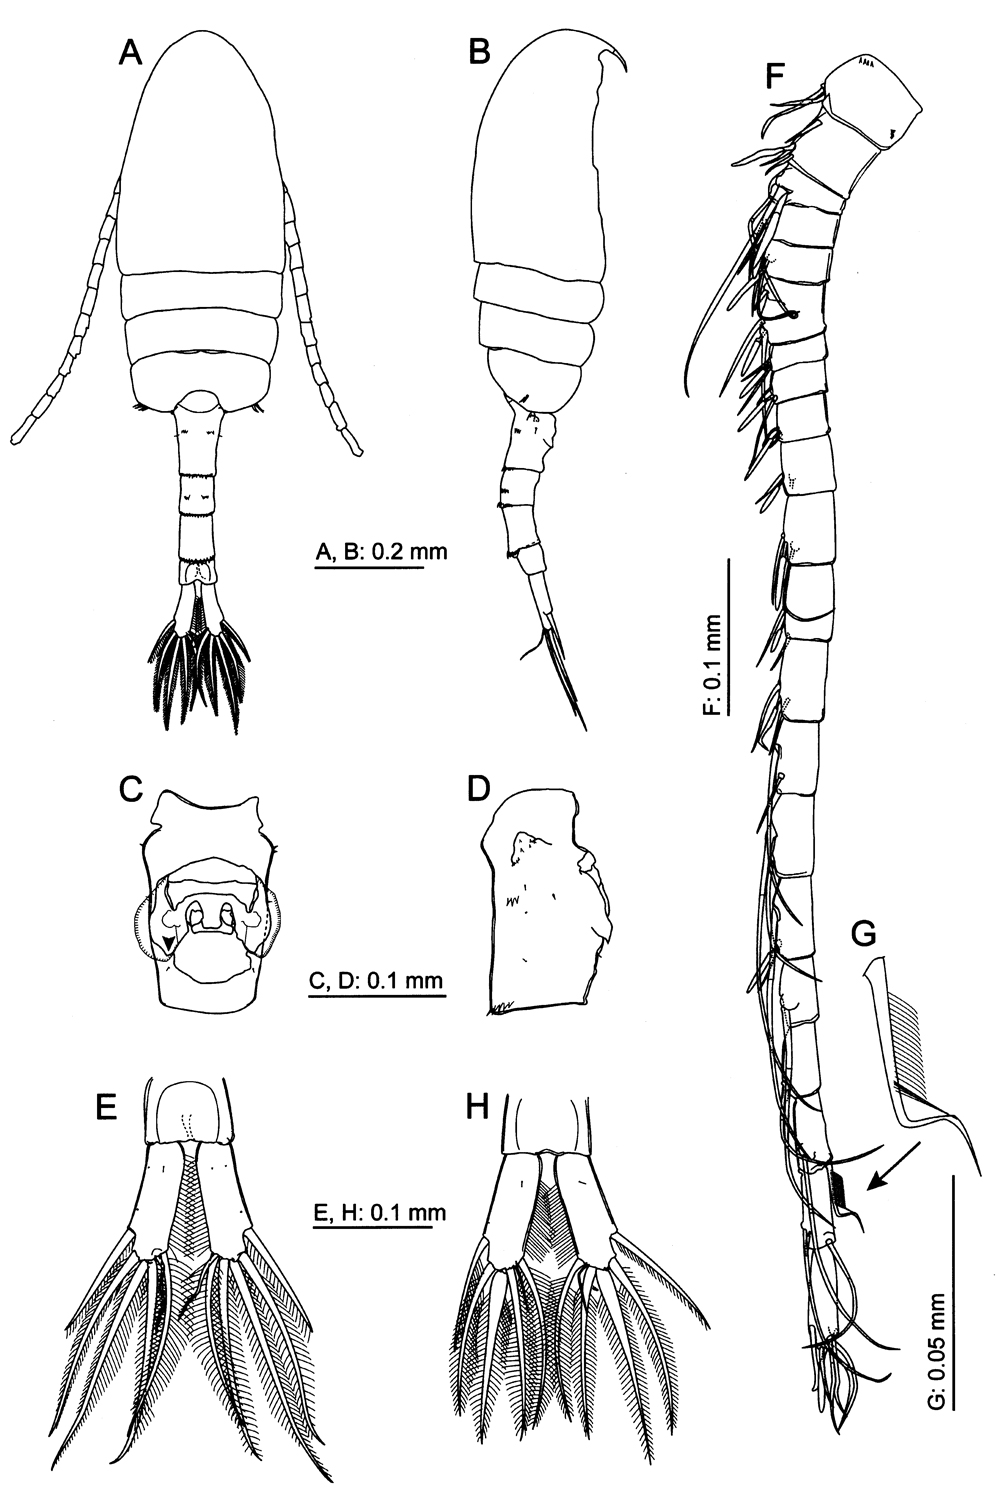 Species Pseudodiaptomus nansei - Plate 1 of morphological figures